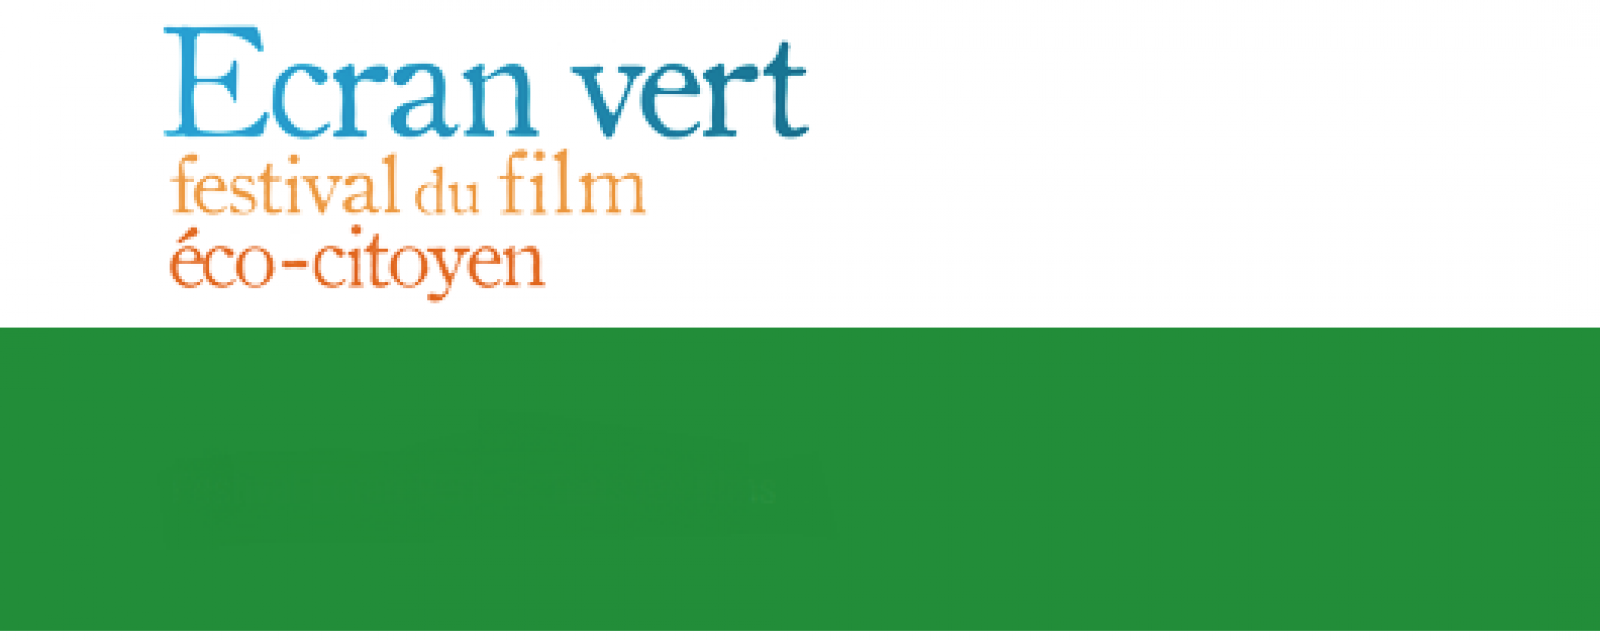 Écran vert, festival du film éco-citoyen